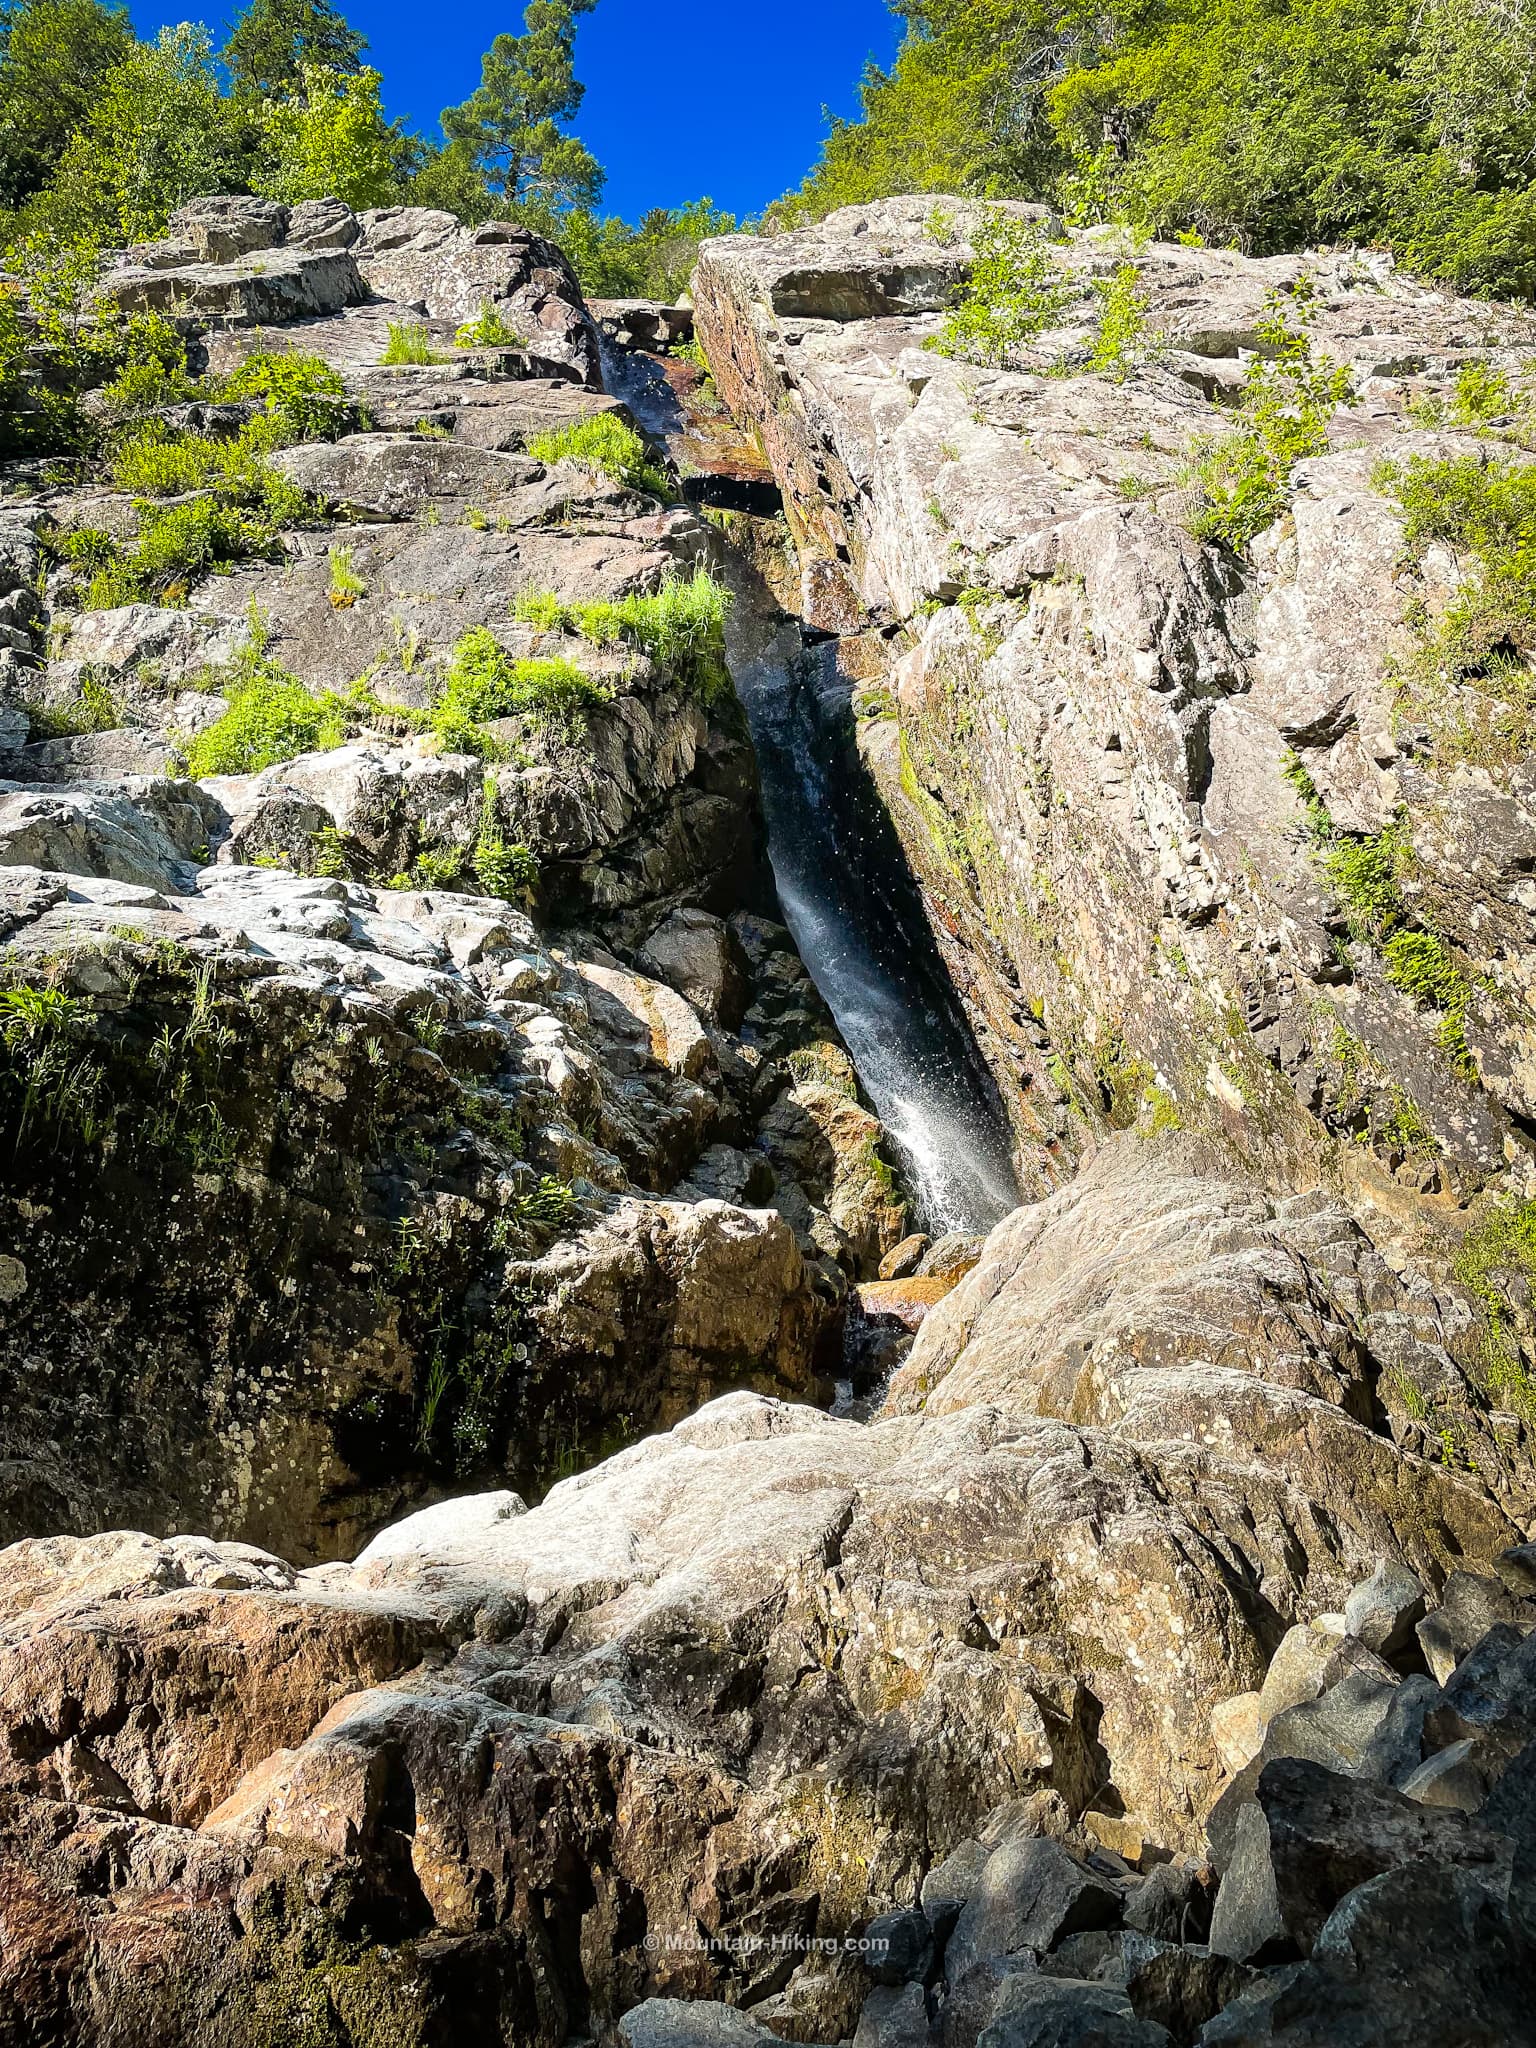 Roaring Brook Falls seen from below